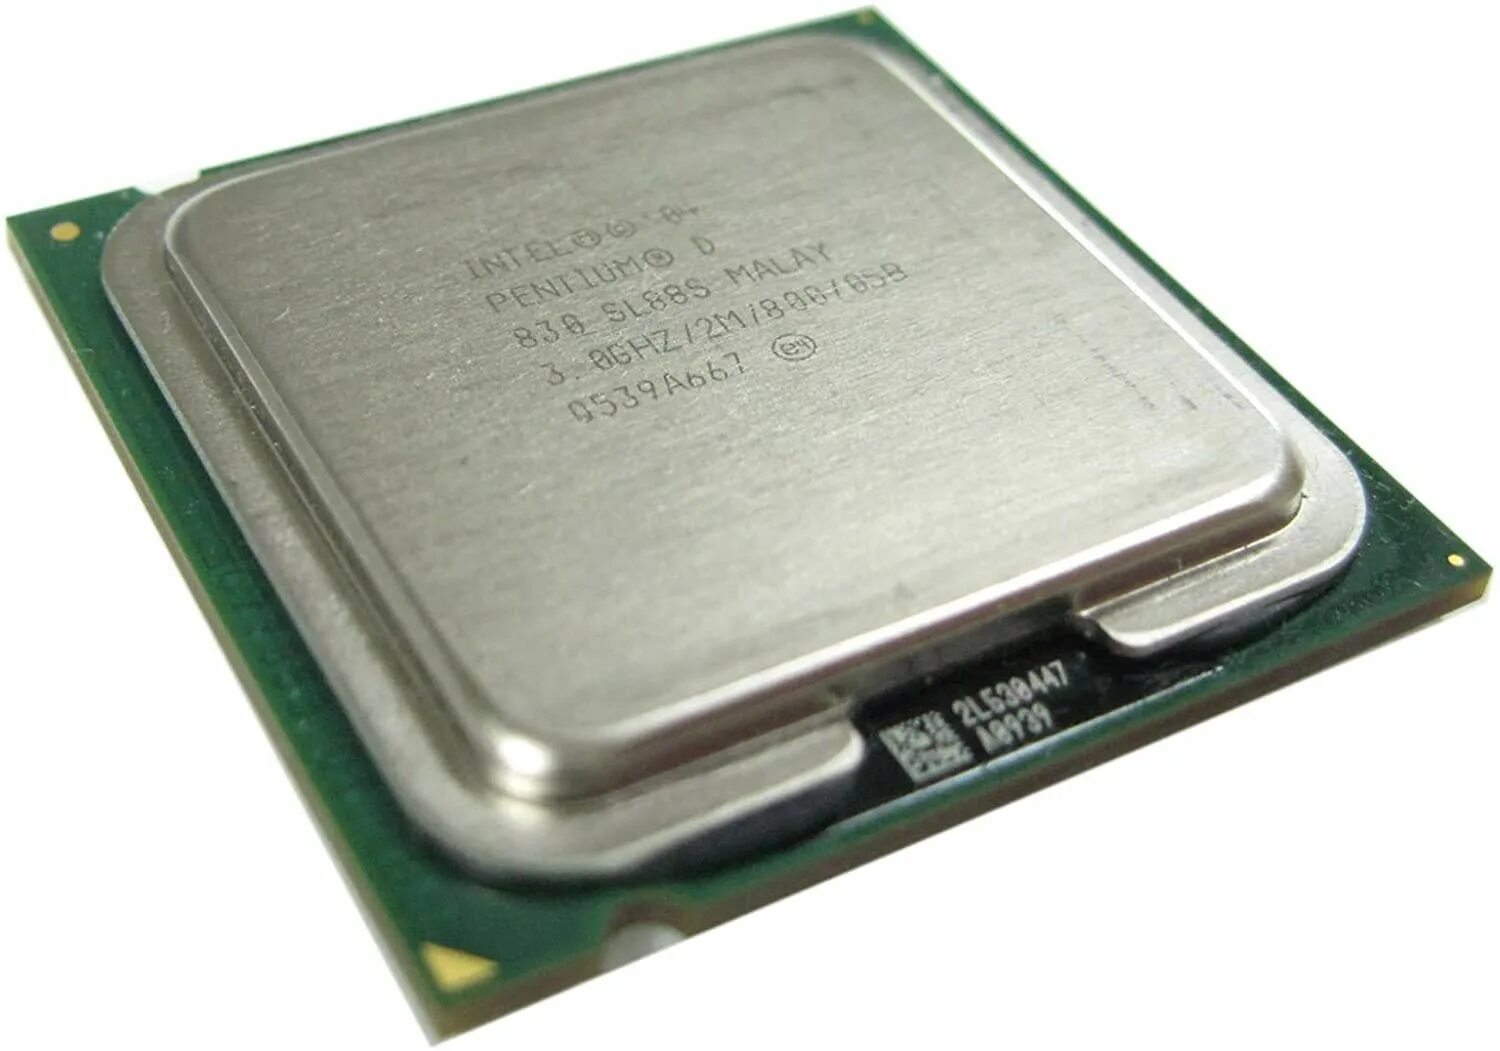 Интел коре пентиум. Процессор Intel Pentium d 830. Процессор Intel Core 2 Duo mobile t7300 Merom. Процессор Intel Xeon e5-2680 Sandy Bridge-Ep. Процессор: Intel Pentium d 830 @ 3.00GHZ; AMD Athlon 64 x2 Dual Core 3600+.